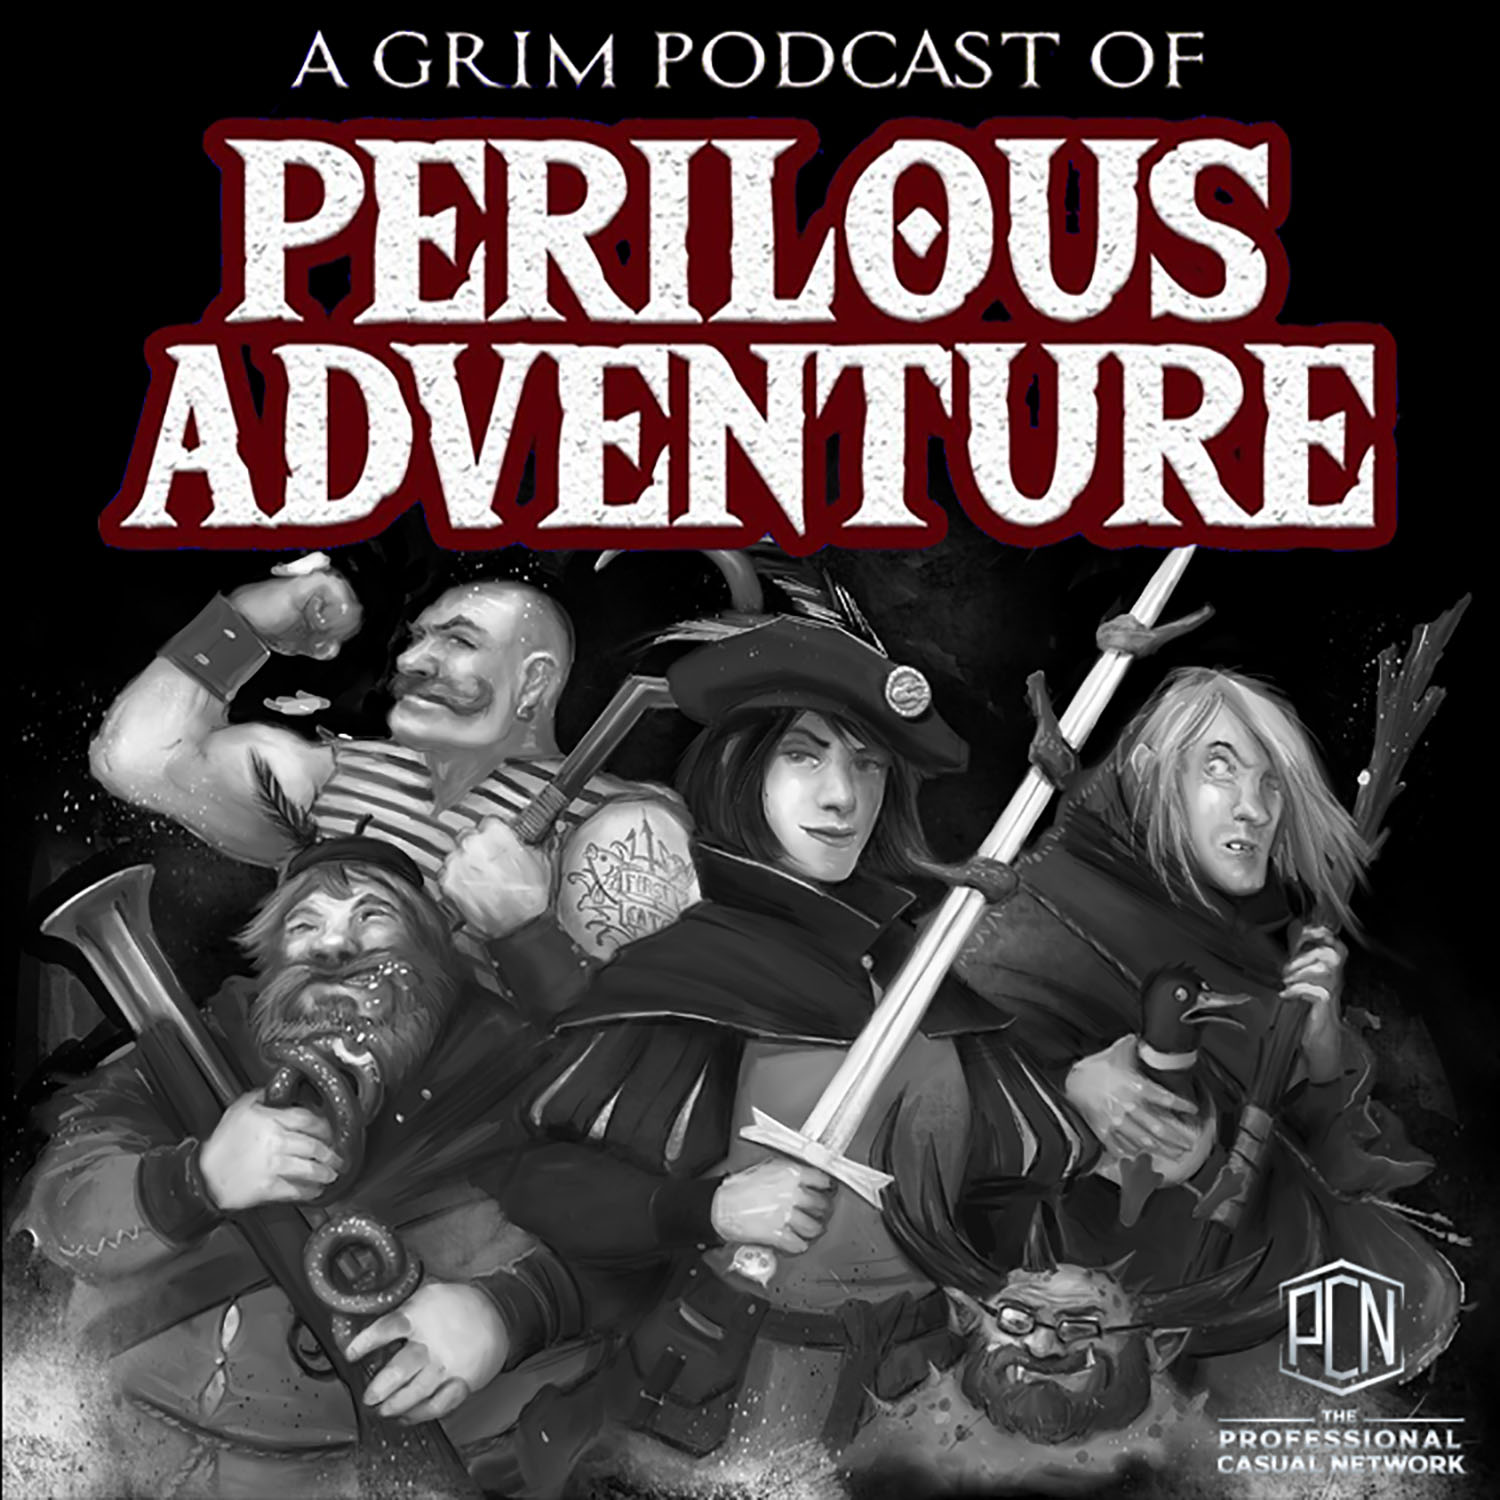 Artwork for podcast A Grim Podcast of Perilous Adventure